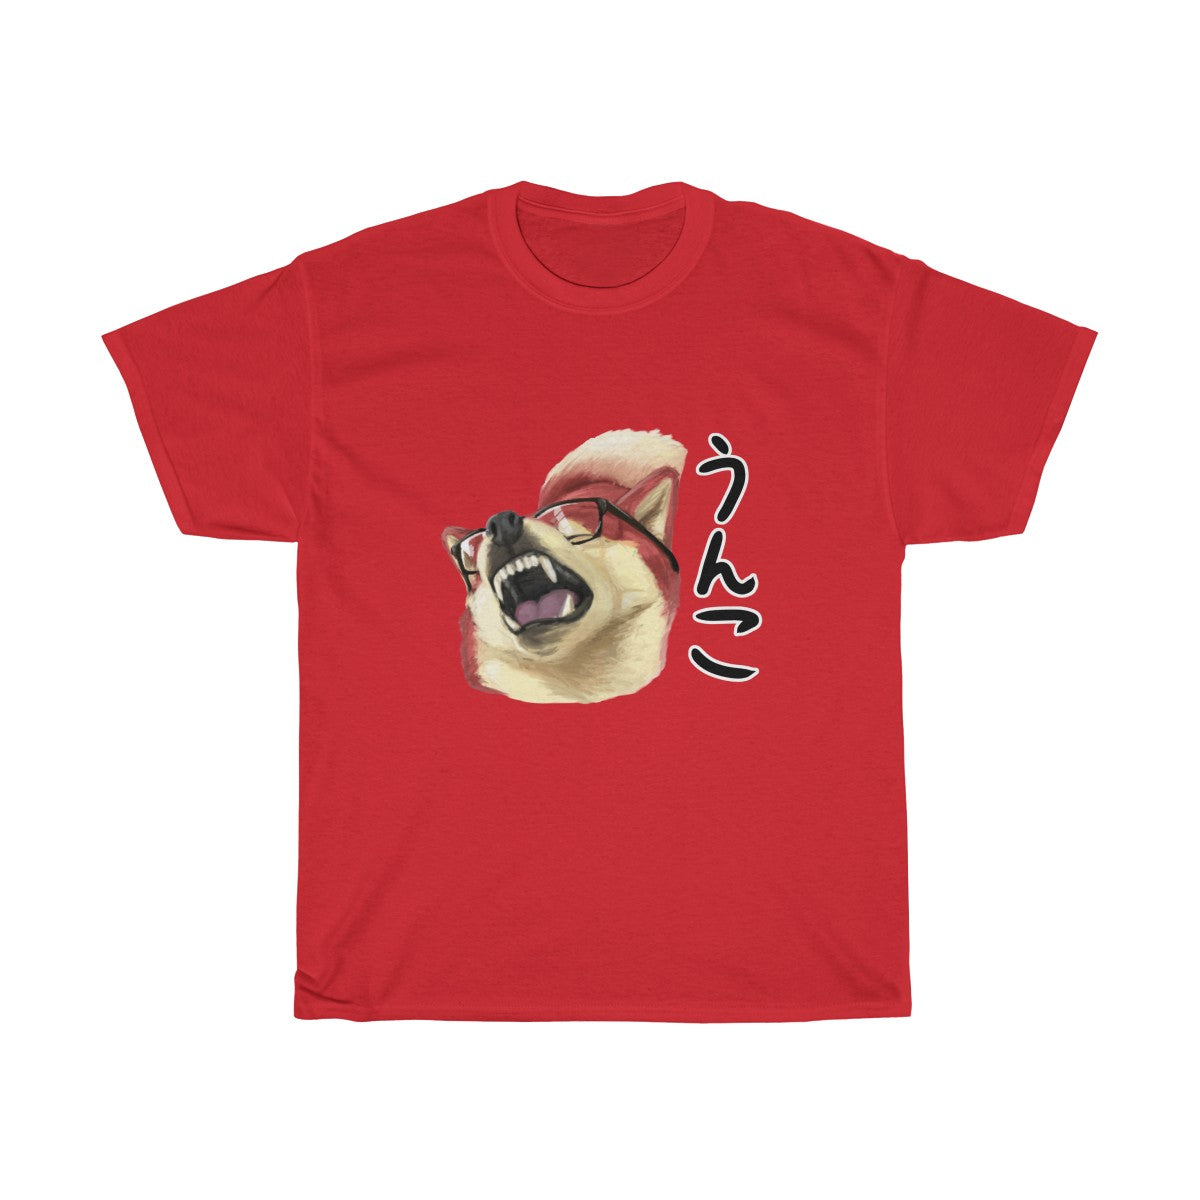 Unko - T-Shirt T-Shirt Ooka Red S 